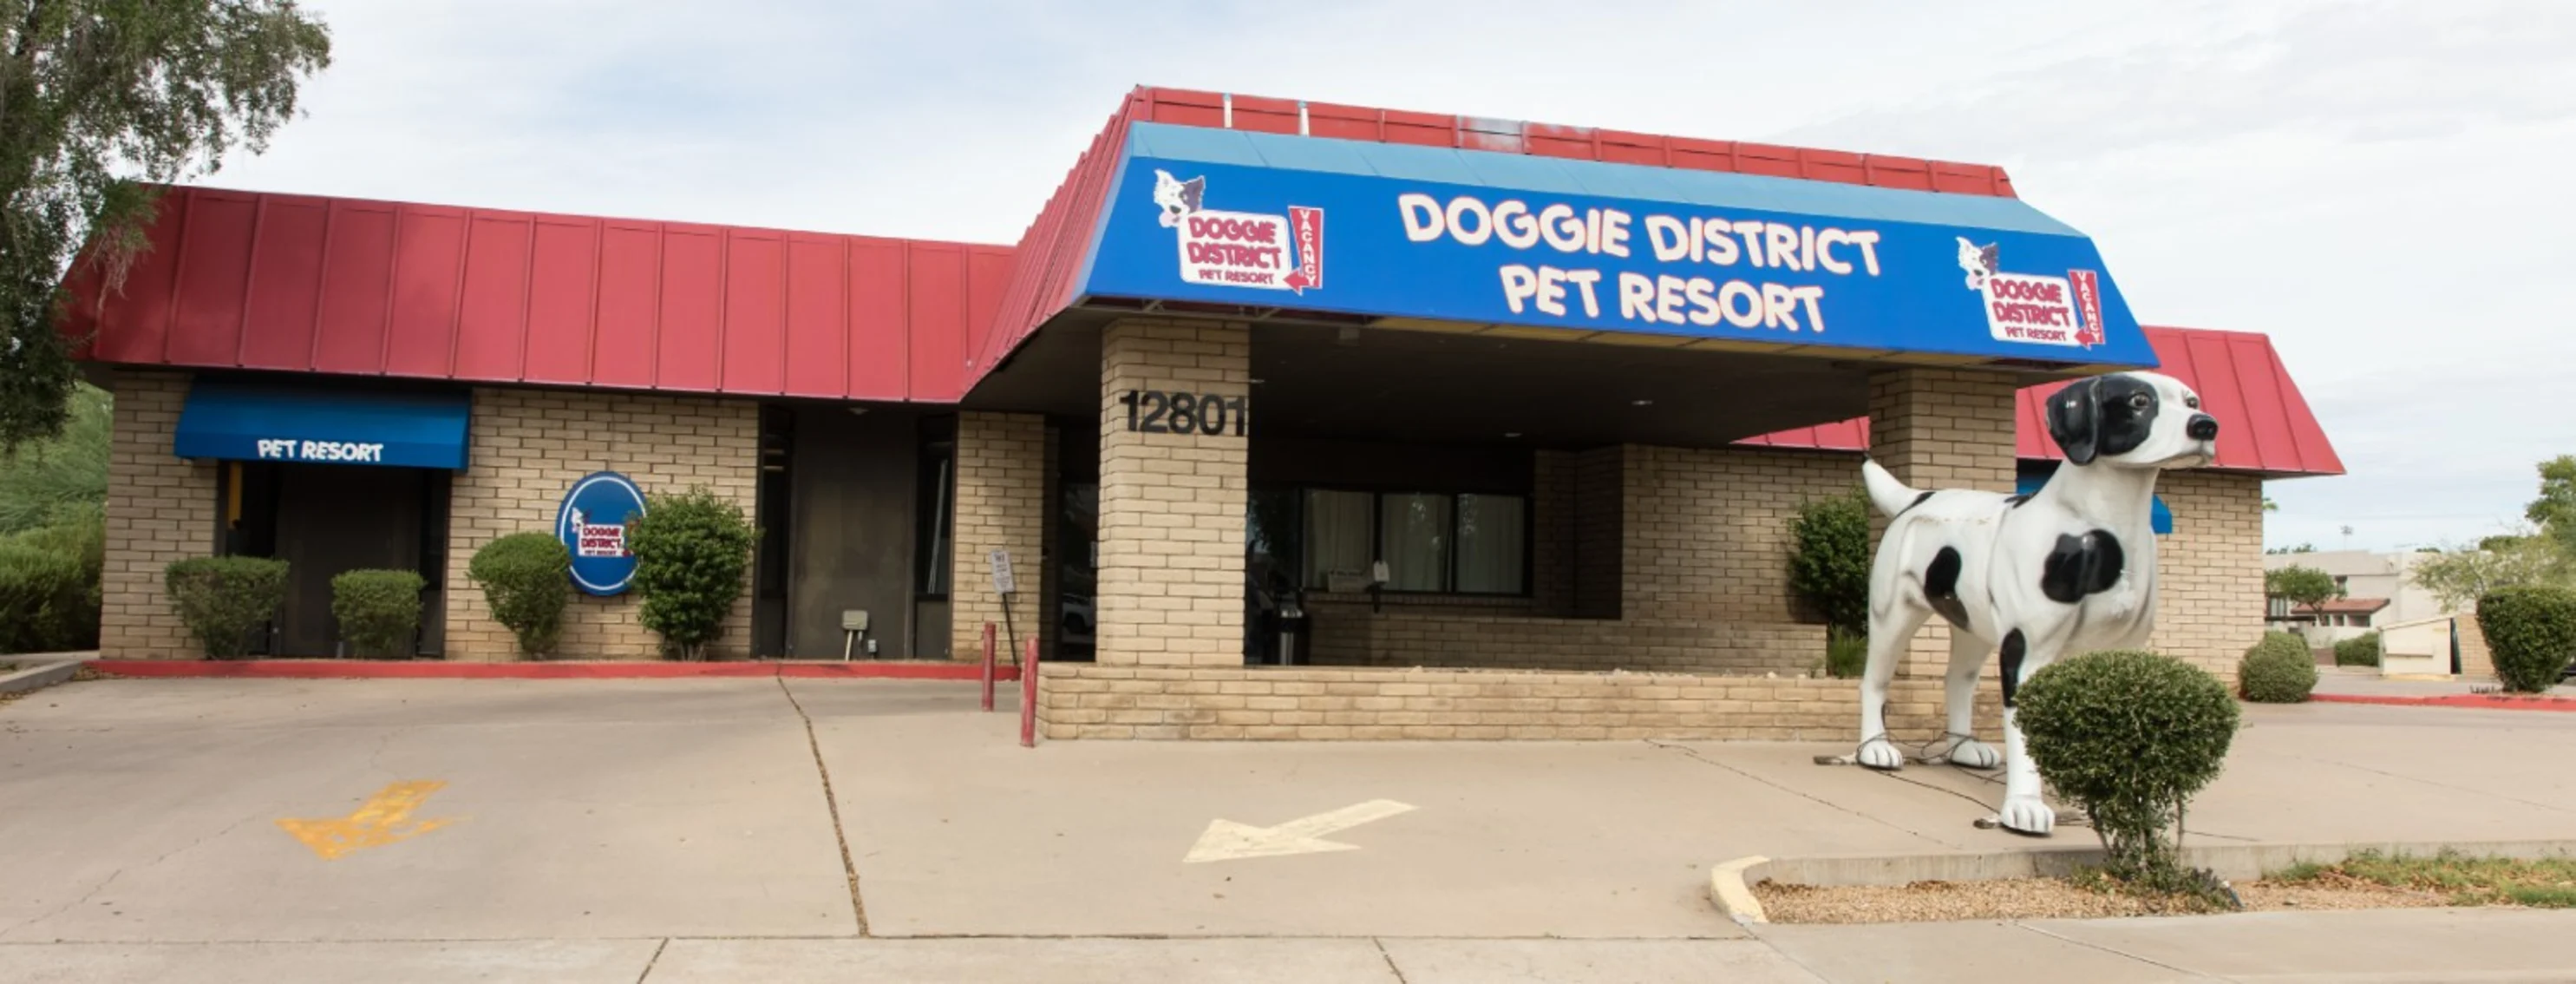 Doggie District Paradise Valley Exterior 